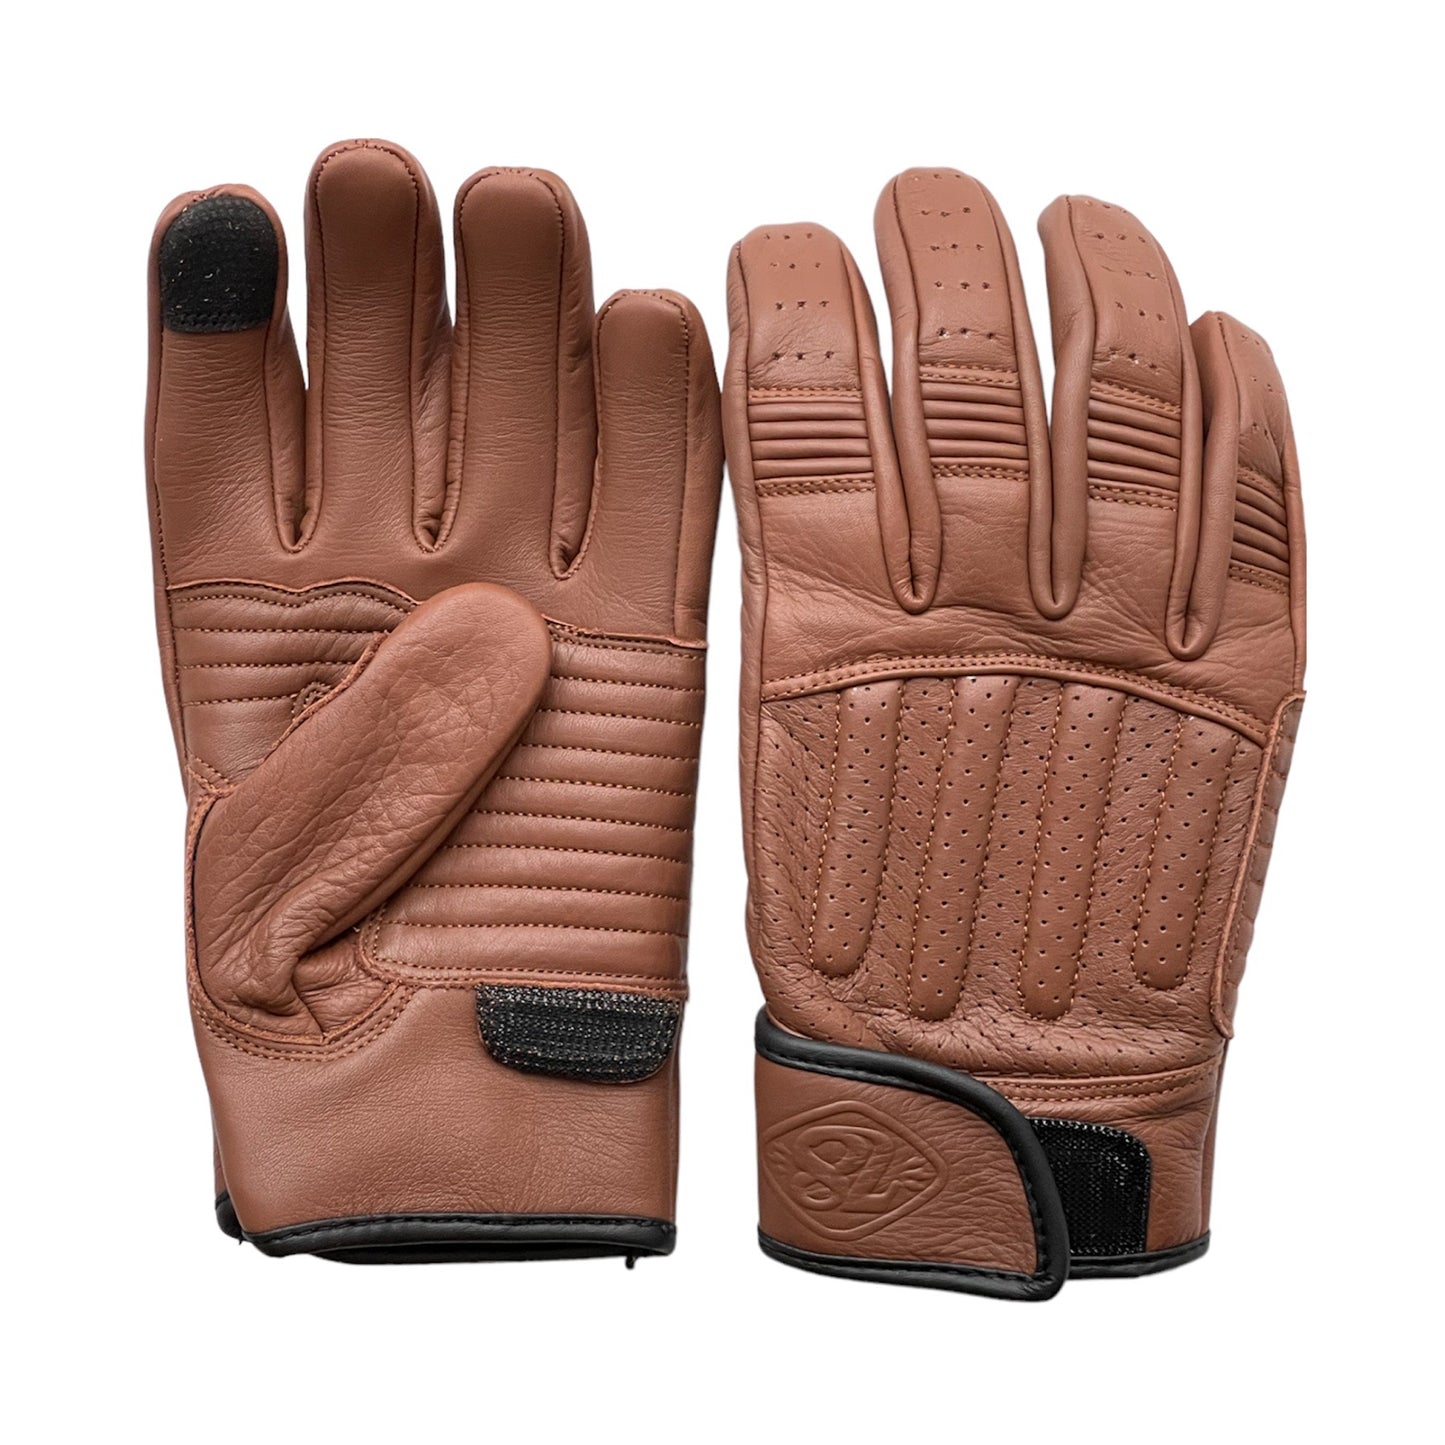 78 Motor Co Sprint Gloves MK4 - Havana Tan